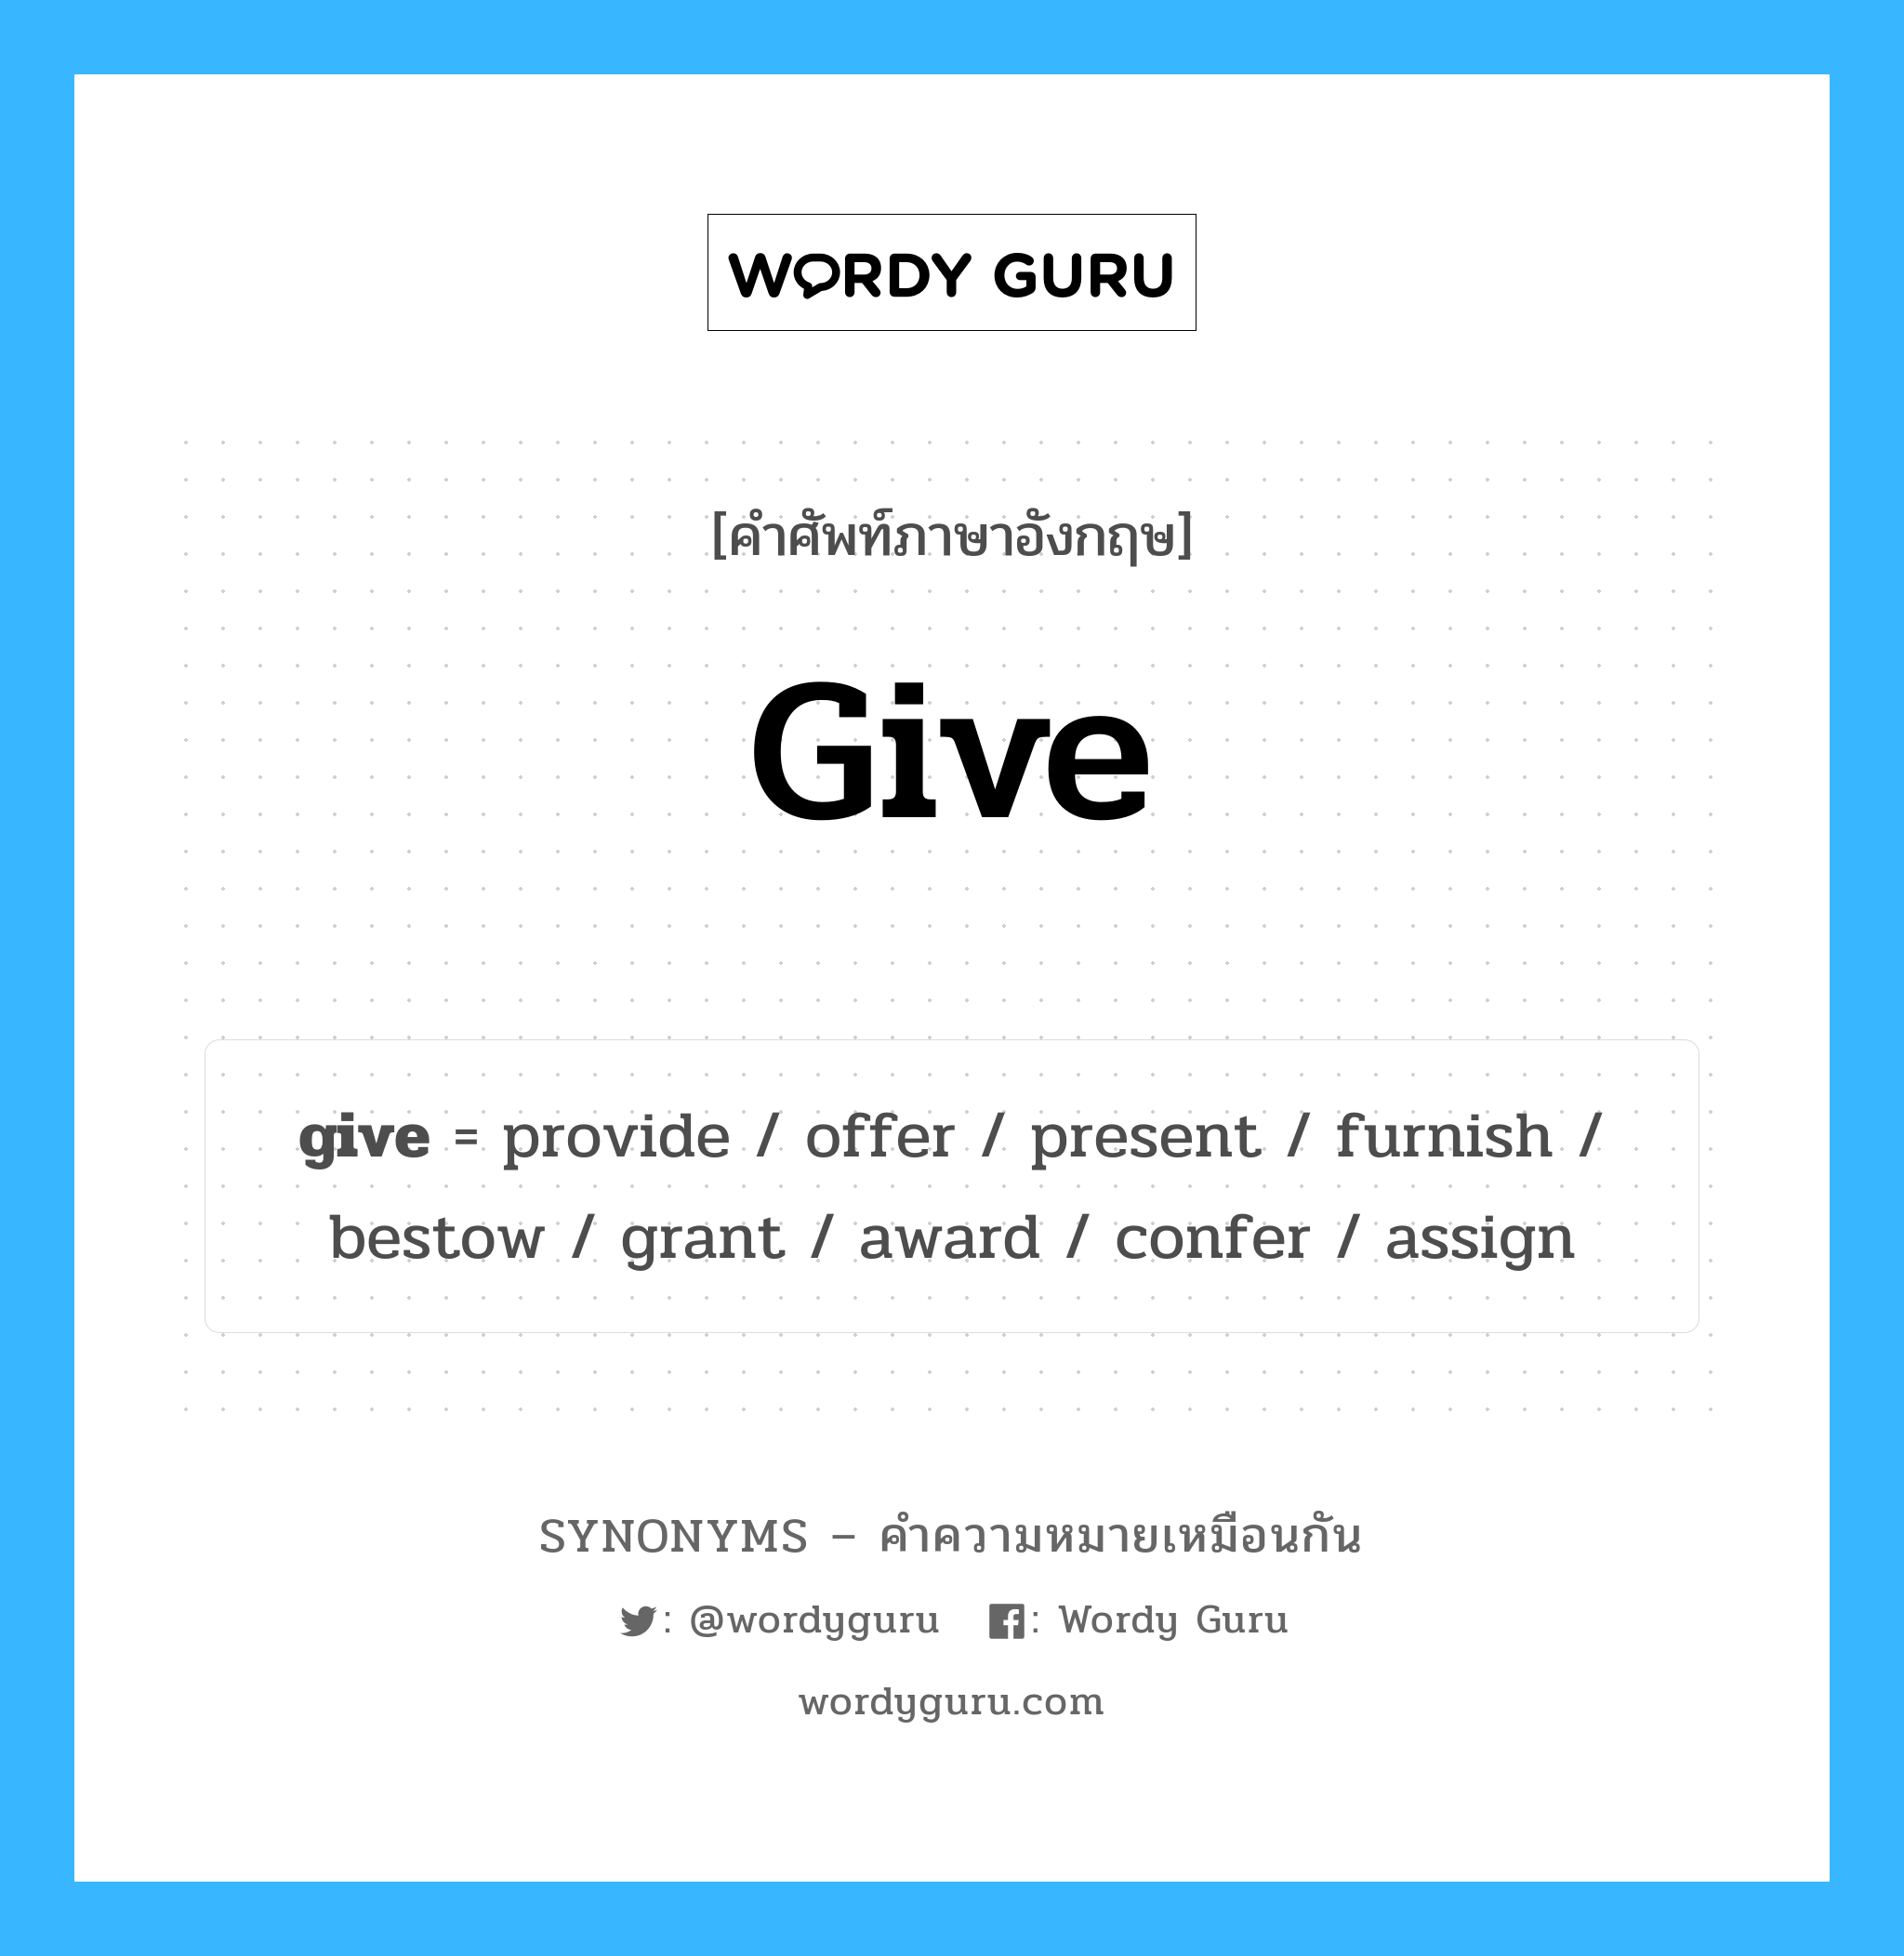 present เป็นหนึ่งใน gift และมีคำอื่น ๆ อีกดังนี้, คำศัพท์ภาษาอังกฤษ present ความหมายคล้ายกันกับ give แปลว่า ปัจจุบัน หมวด give